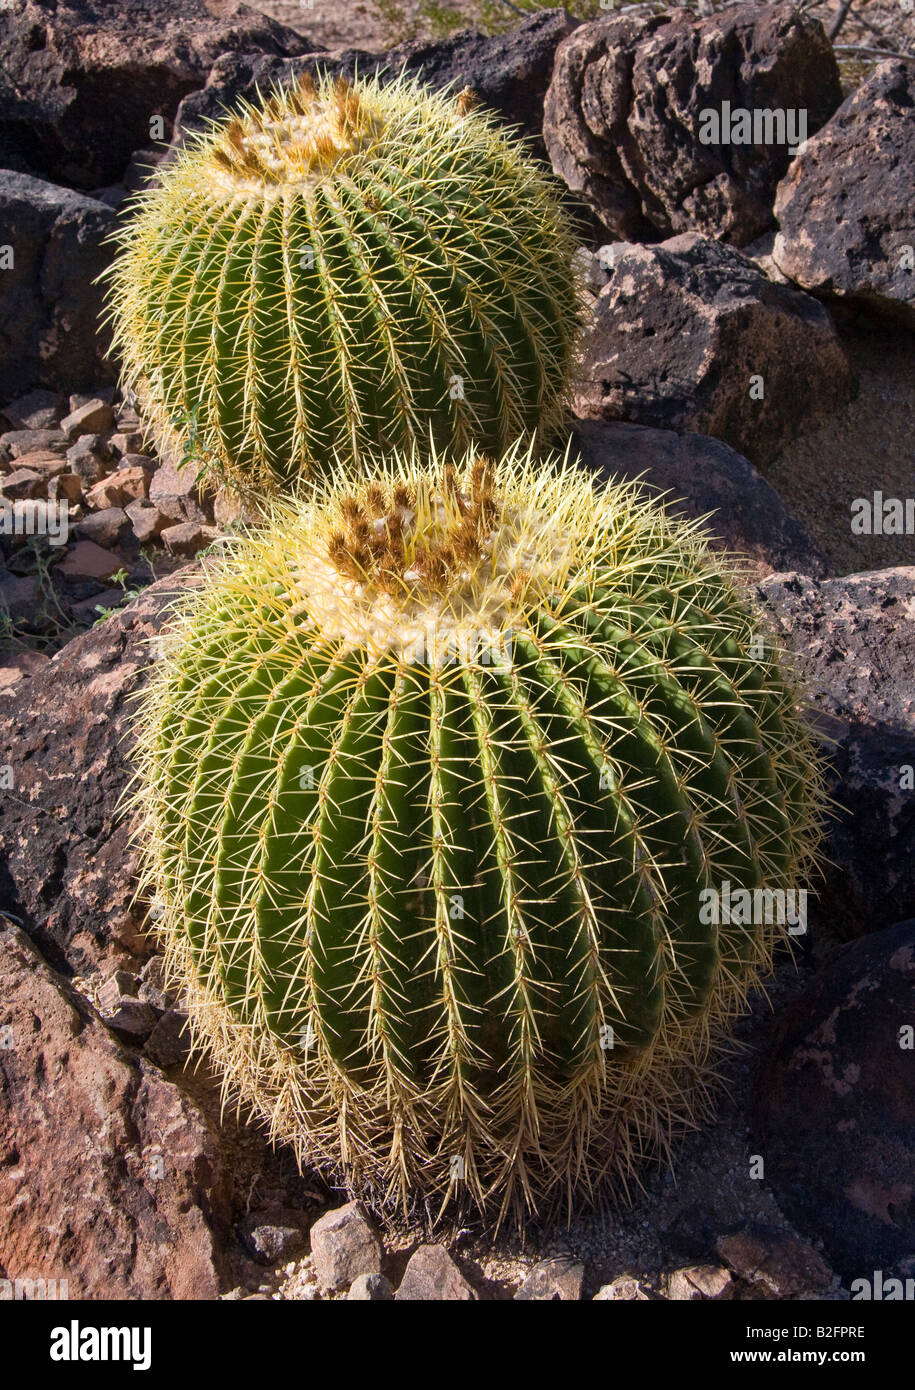 Two barrel cactus in rocky suroundings Stock Photo